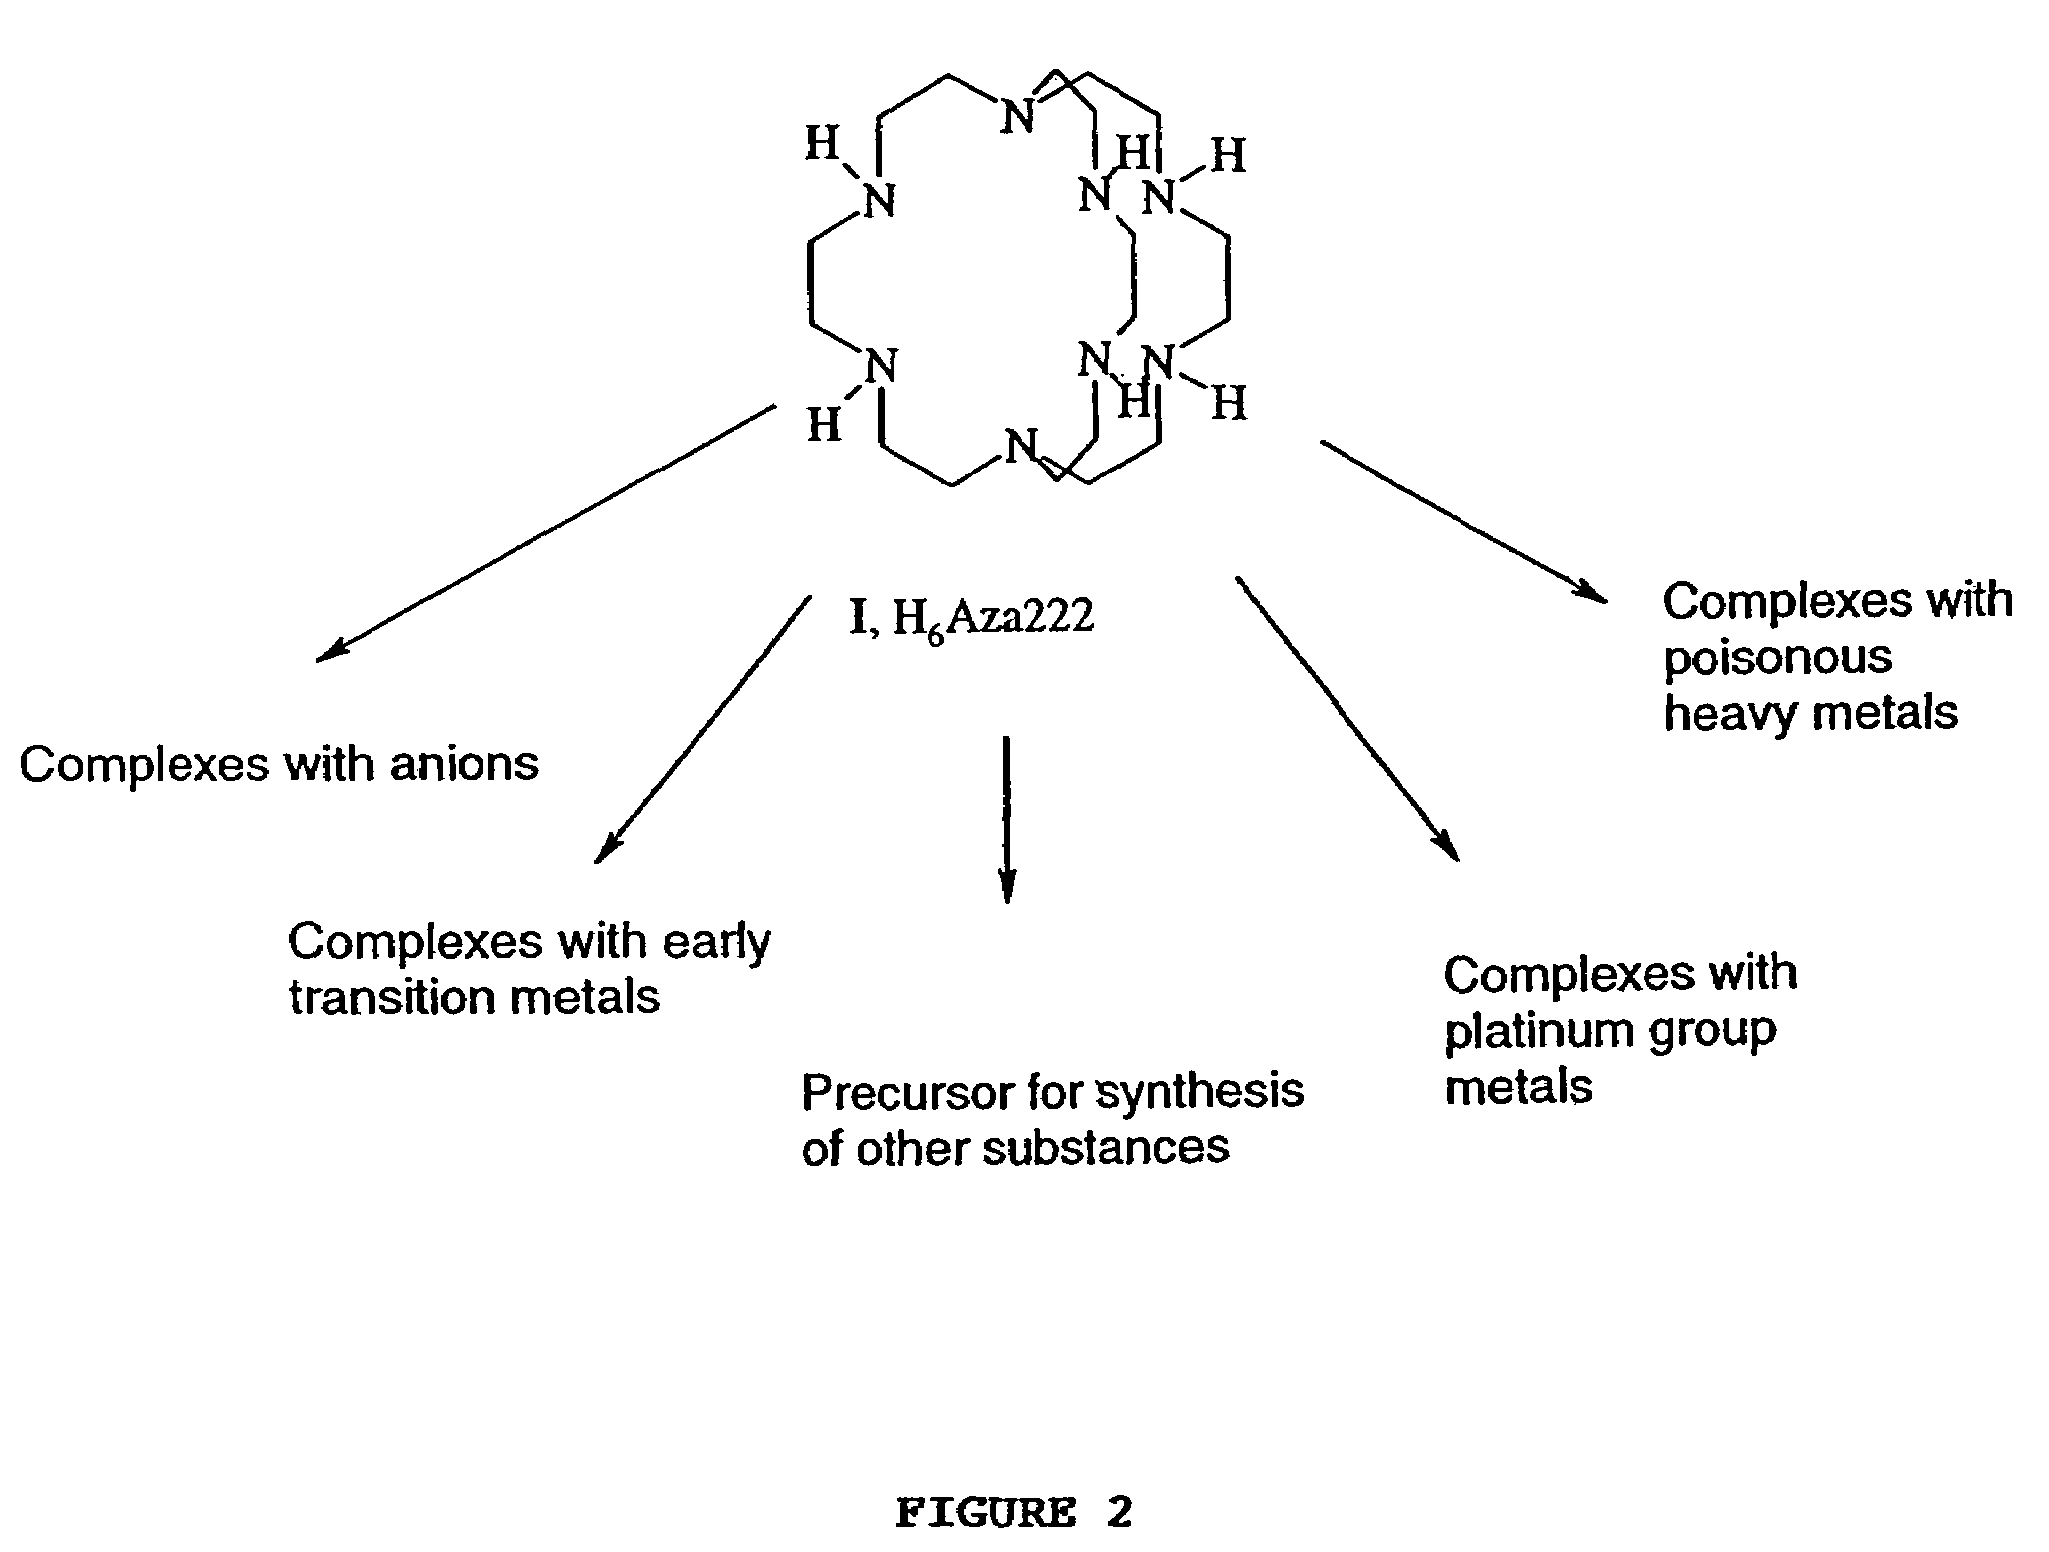 Method of synthesis of 1, 4, 7, 10, 13, 16, 21, 24-octaazabicyclo [8.8.8] hexacosane (1) and 1, 4, 7, 10, 13, 16, 21, 24-octaazabicyclo [8.8.8] hexacosa, 4, 6, 13, 15, 21, 23-hexaene (2)